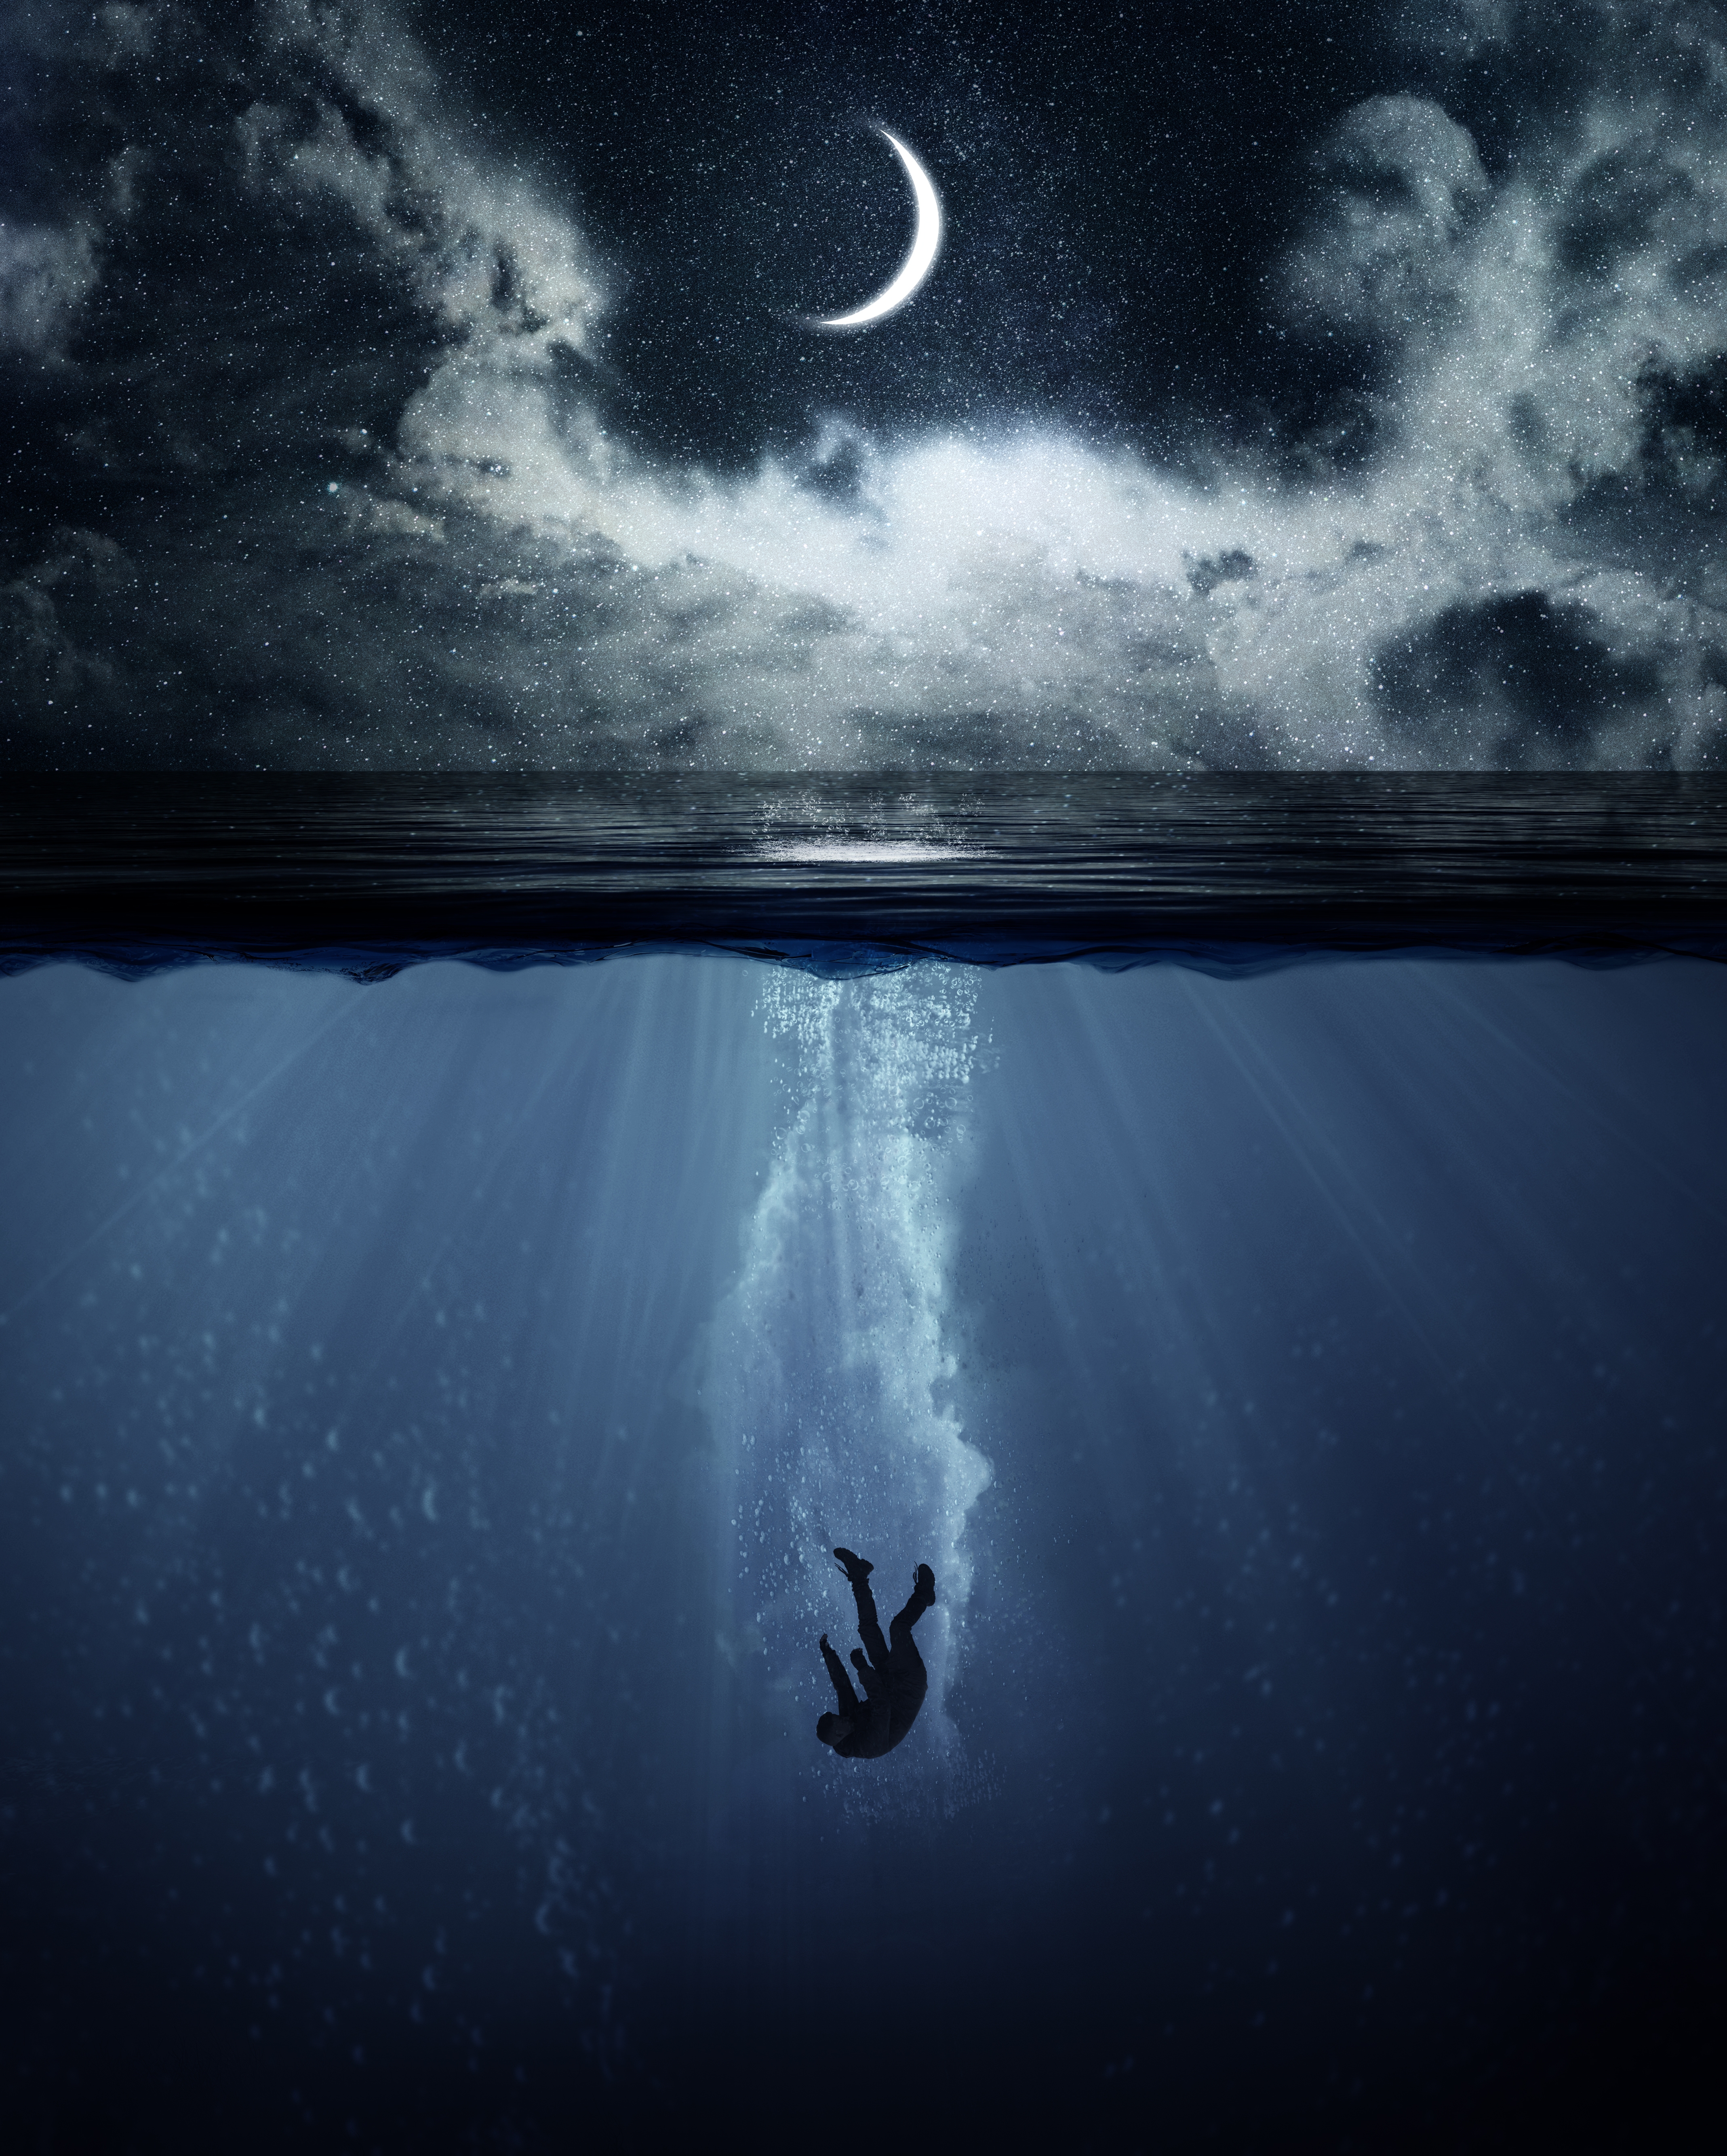 HD wallpaper, Photo Manipulation, Drowning, Illustration, Cloudy Sky, Ocean Waves, Deep, Crescent Moon, Underwater, Horizon